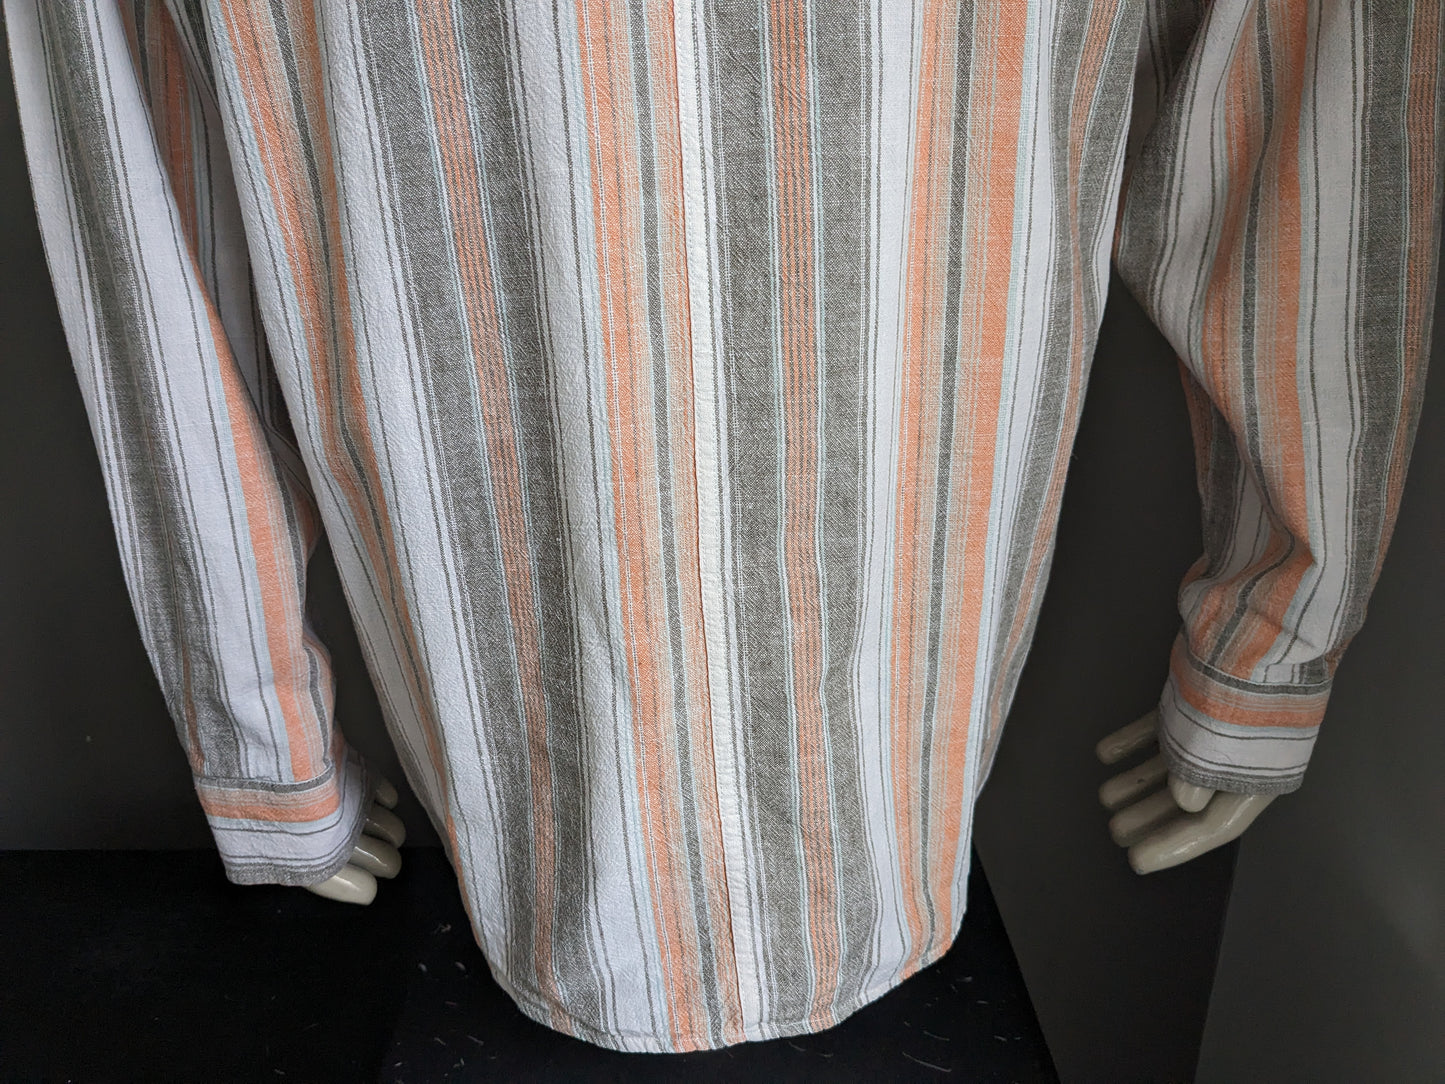 Suéter / camisa de polo GW vintage con collar elevado / agricultores / mao. Naranja gris rayada. 55% de lino. Tamaño xxl.